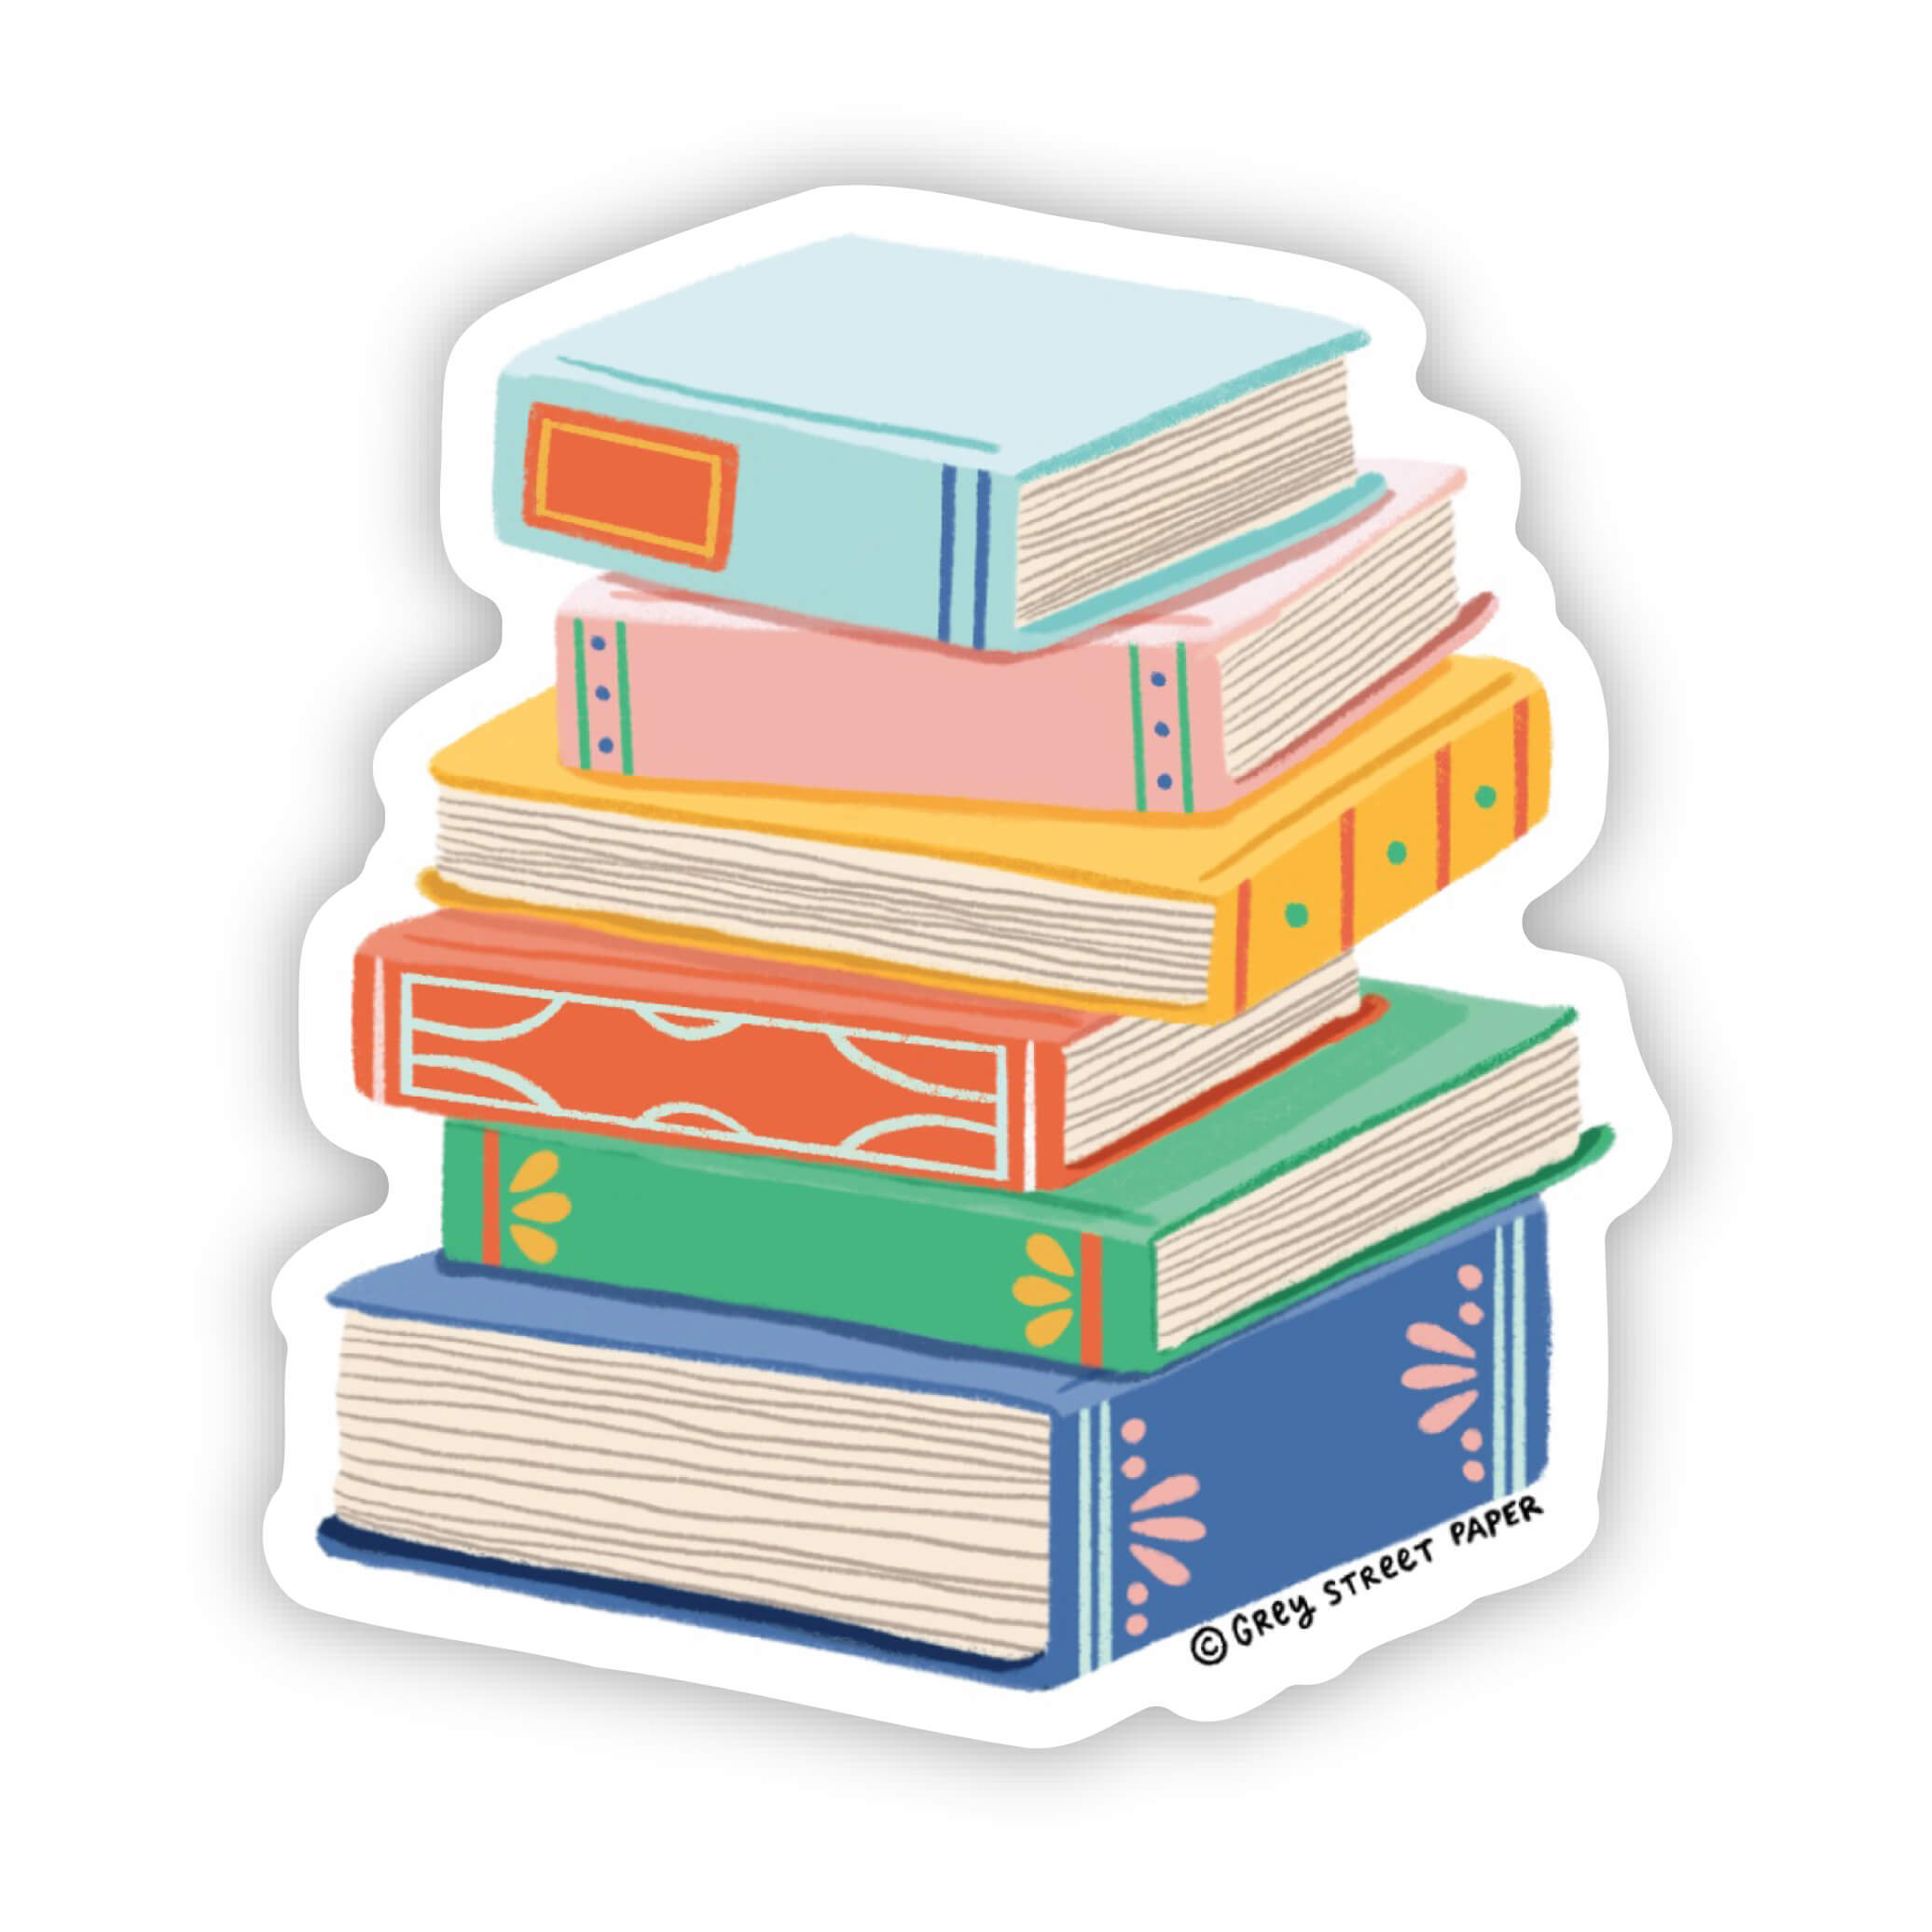 Aesthetic Book Lover Design  Sticker for Sale by ellencarney13